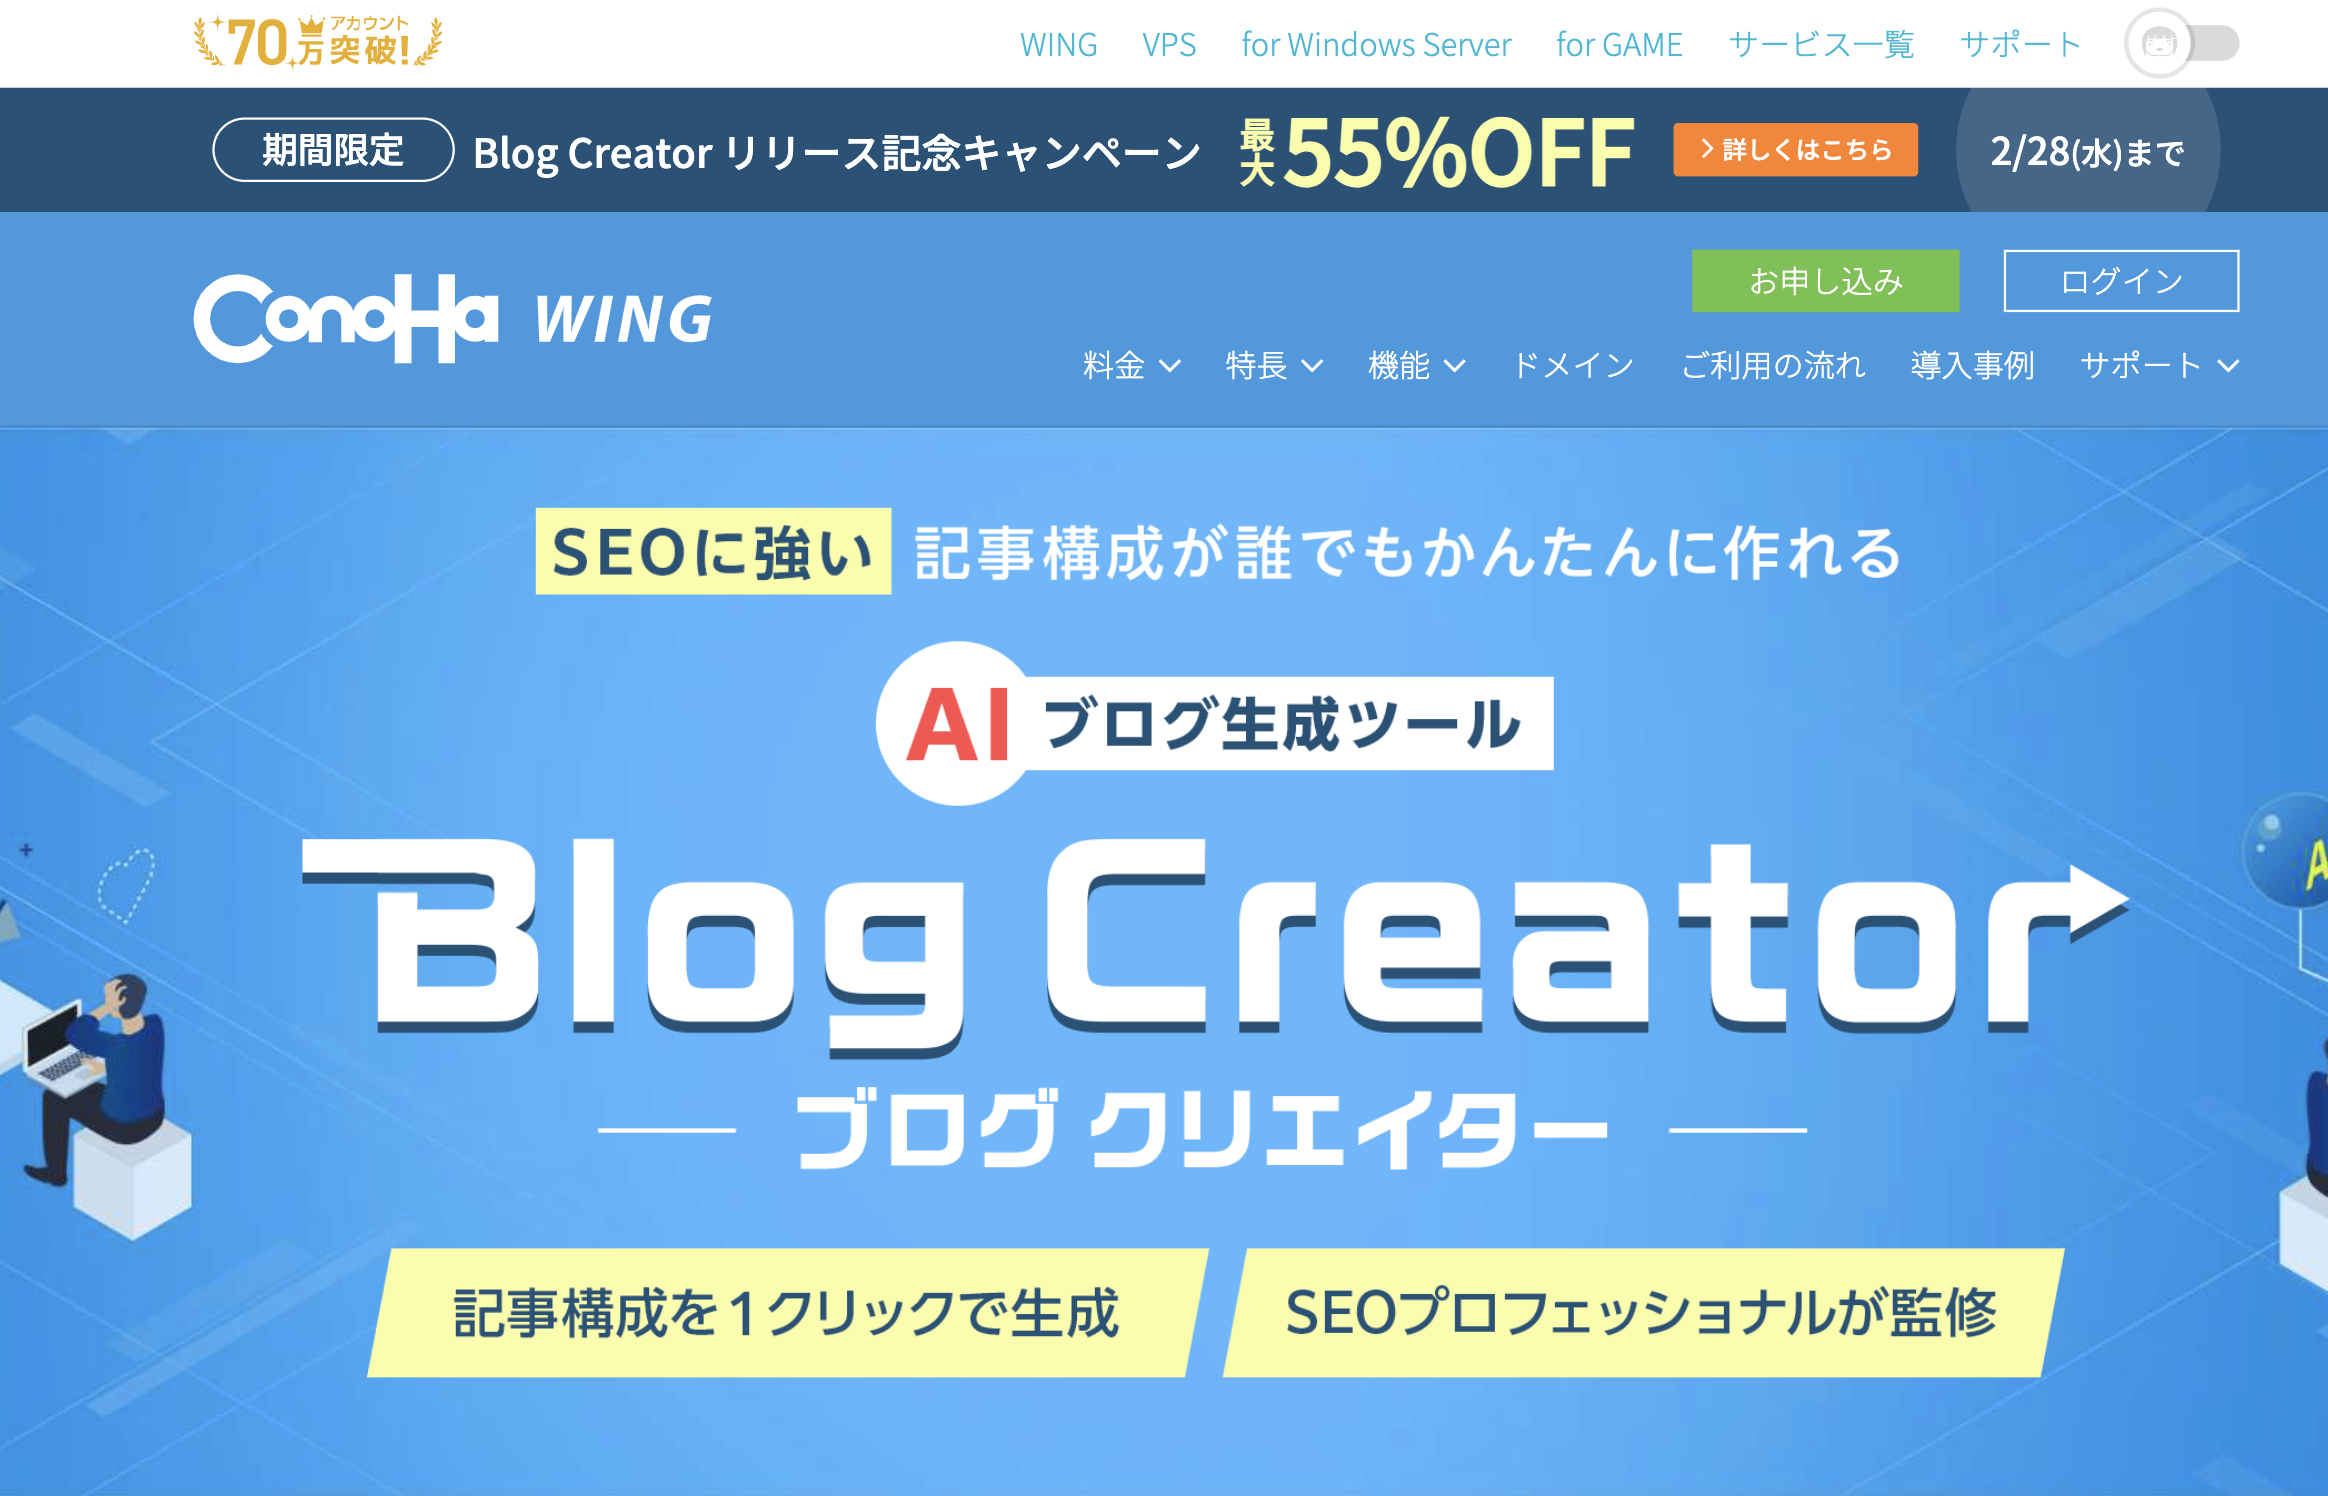 Blog Creator